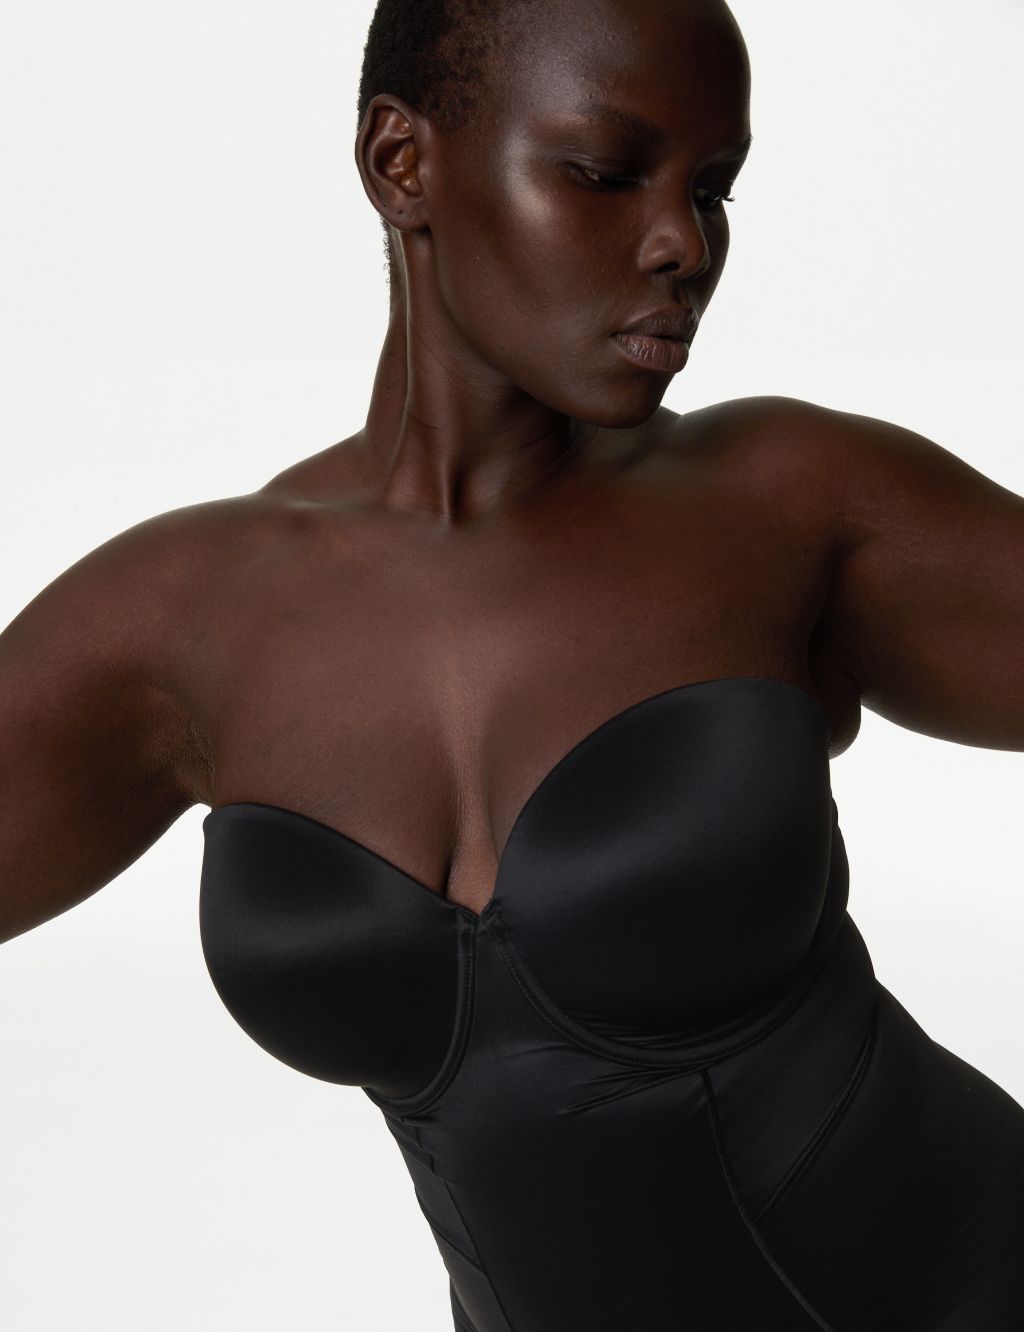 MeMoi Body Suit With Brief Waist Cinchers, Medium, Black at  Women's  Clothing store: Shapewear Bodysuits